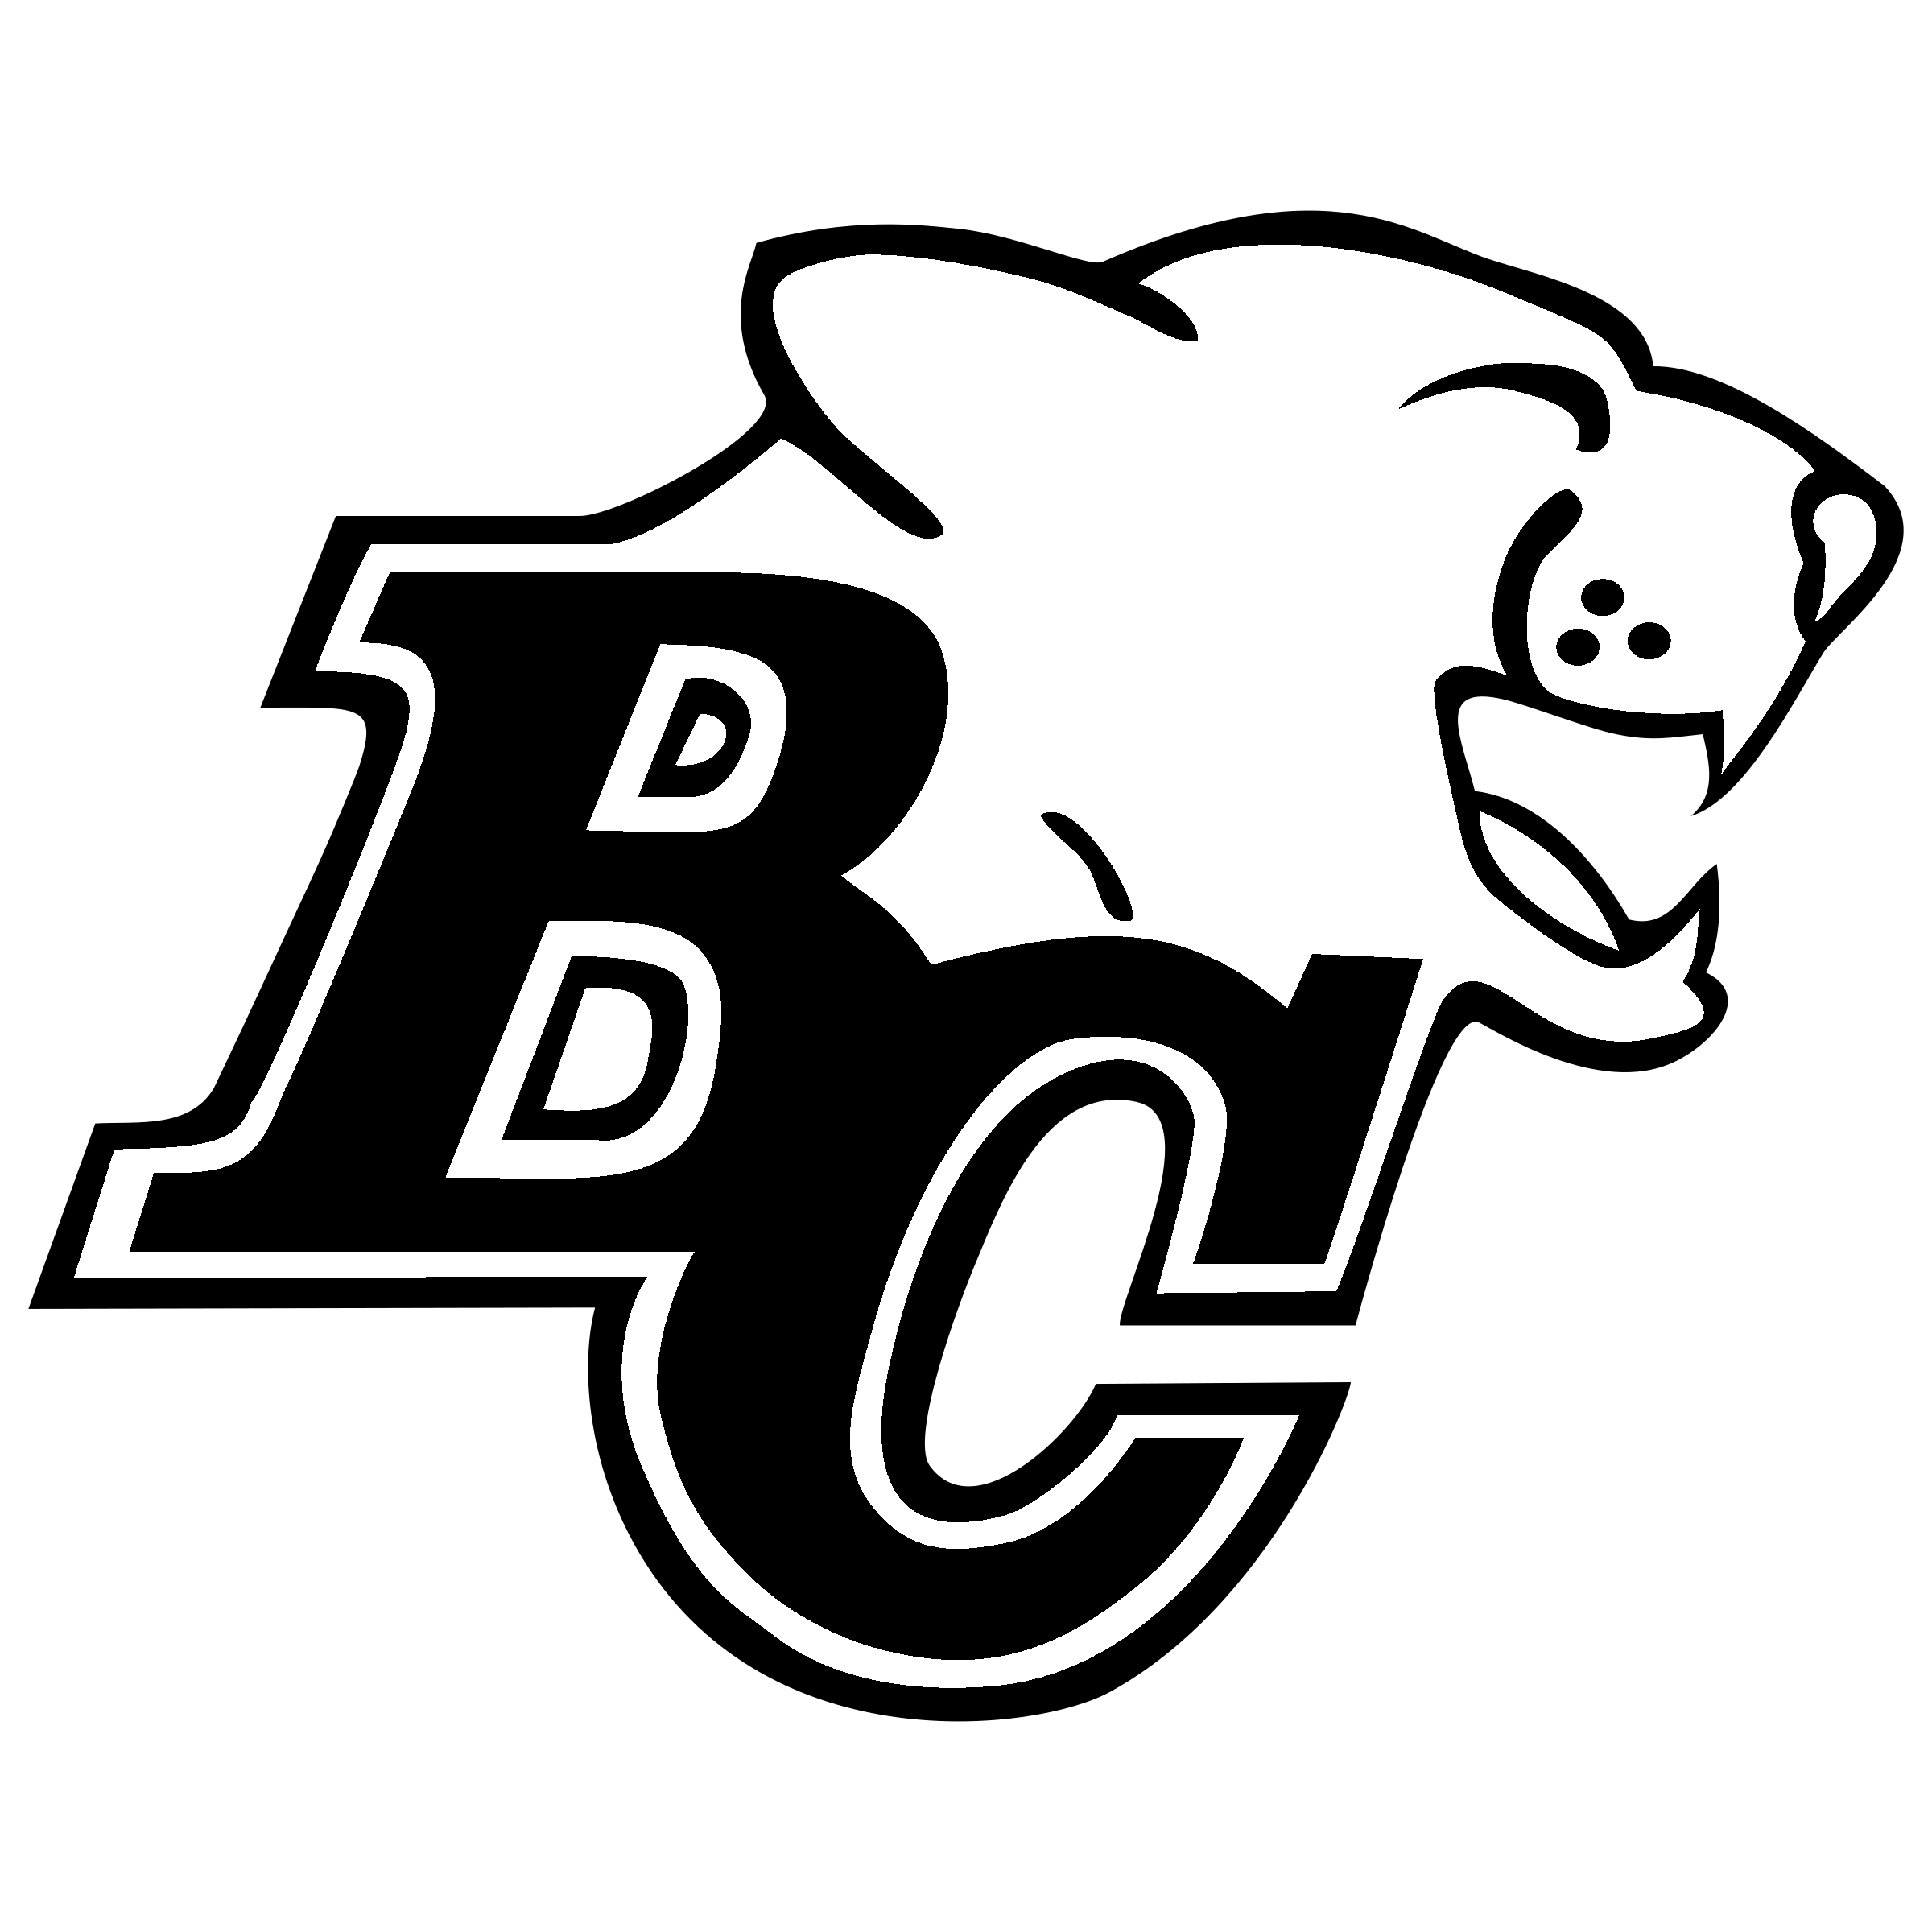 BC Lions Logo - BC Lions Logo PNG Transparent & SVG Vector - Freebie Supply